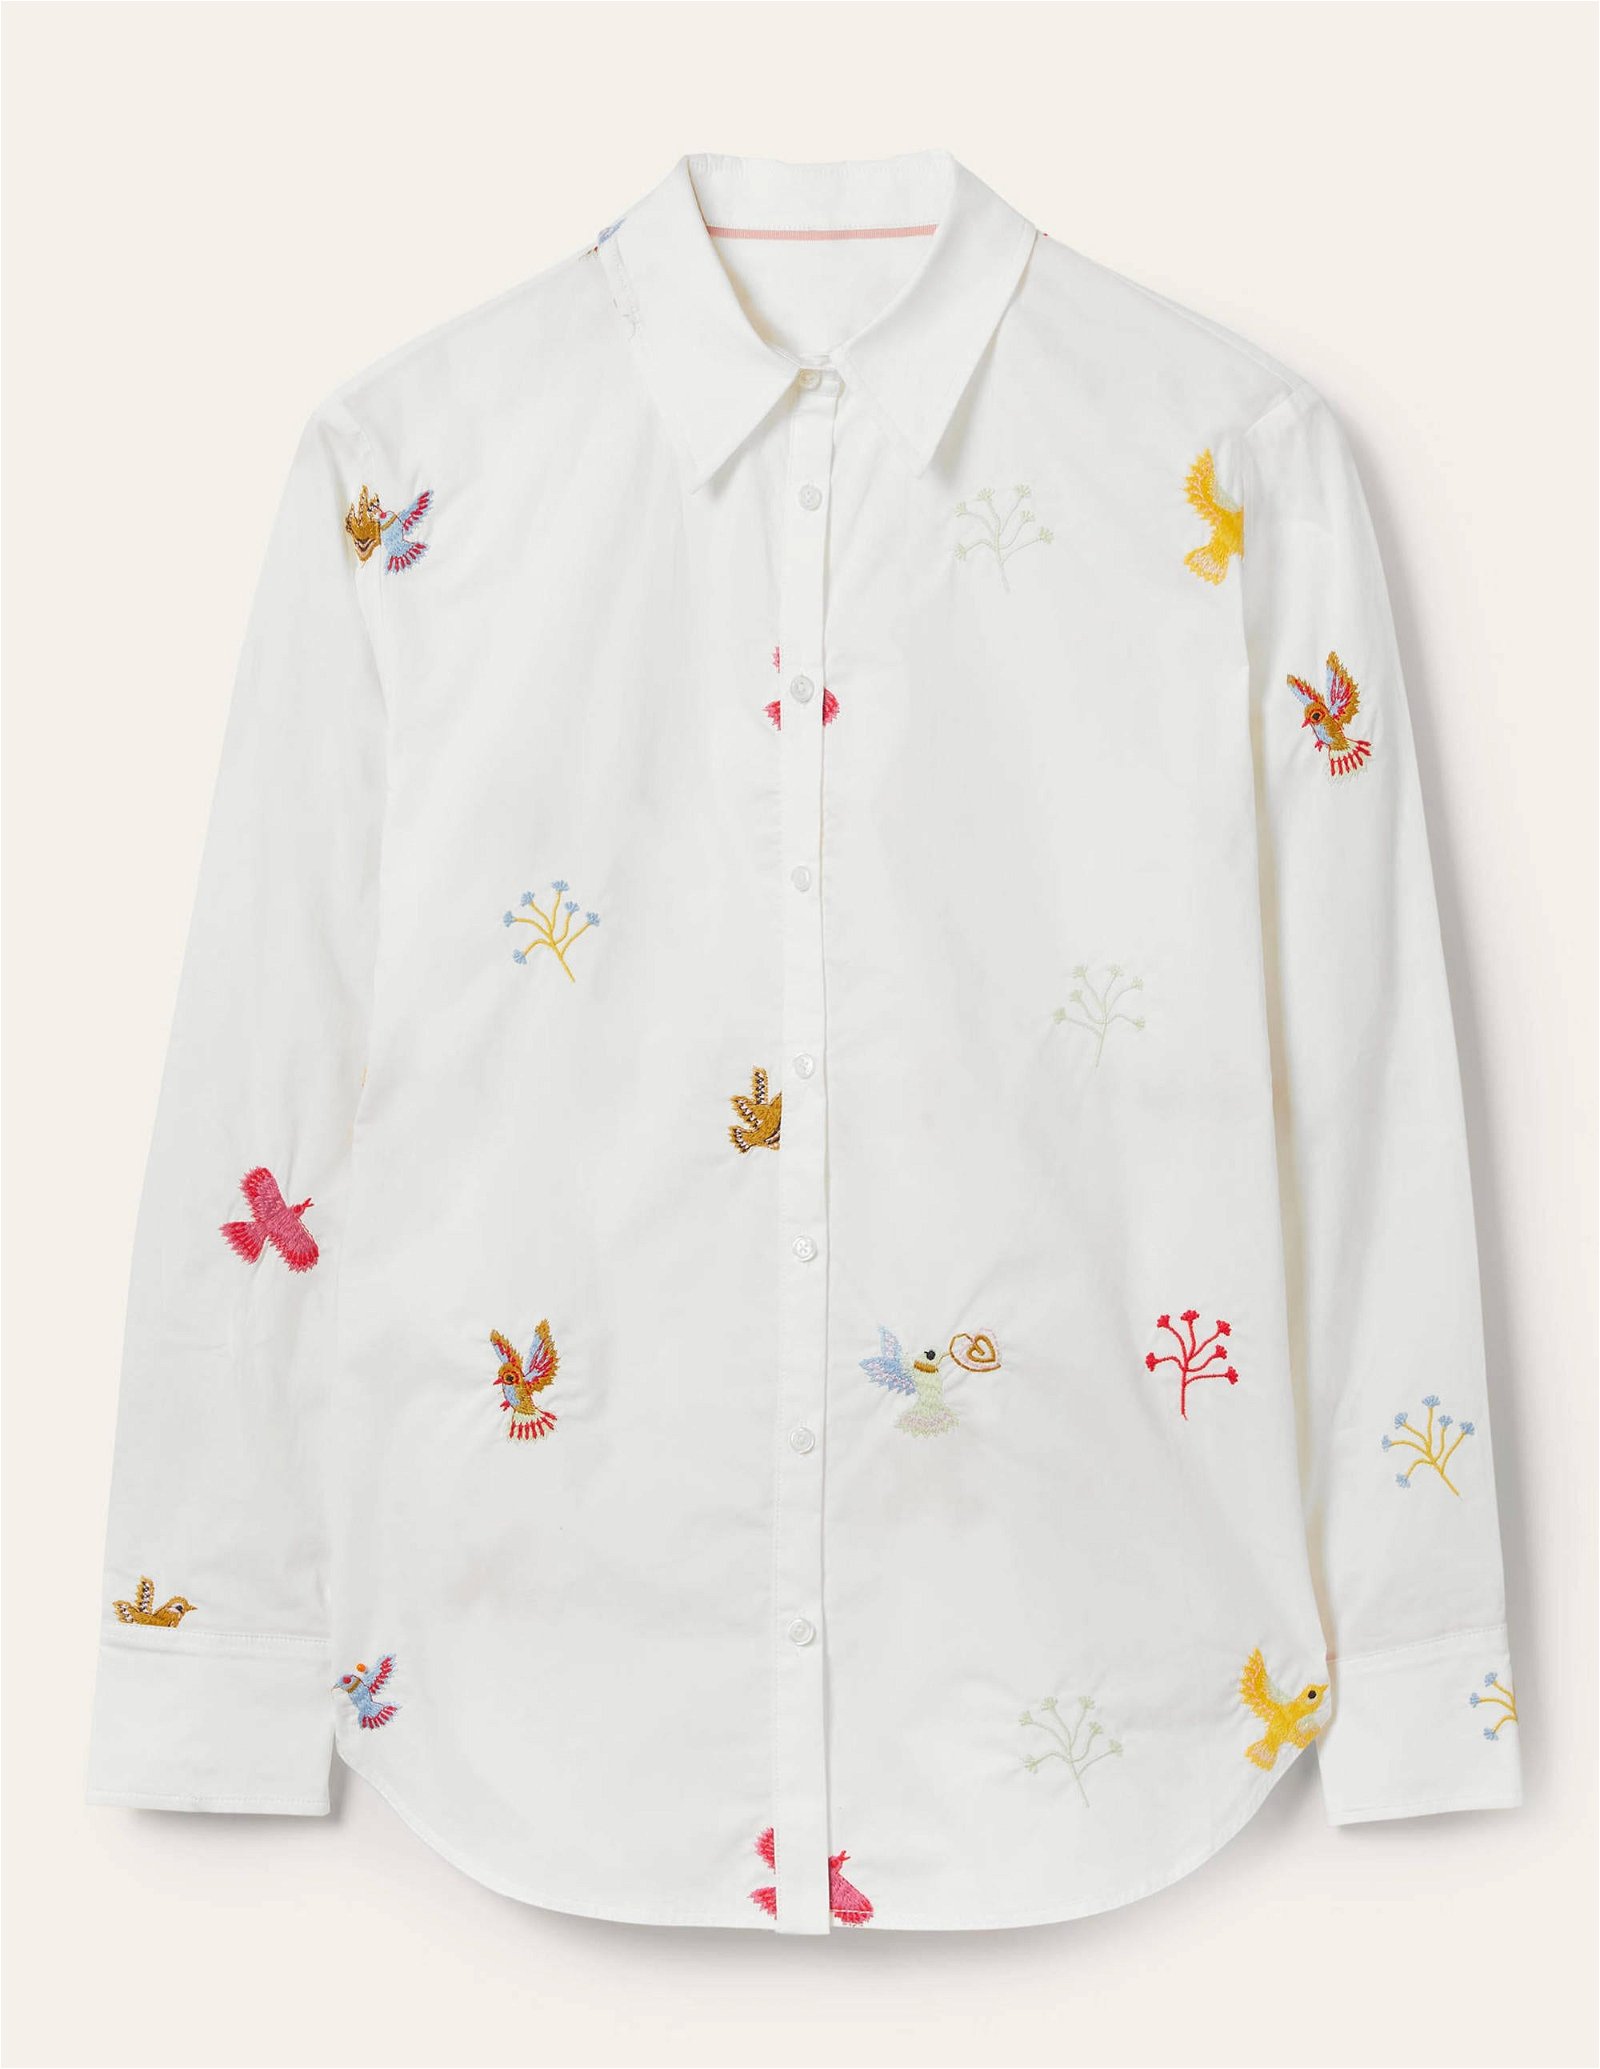 Boden Women's Classic Cotton Shirt Ivory, Tropic Bird Size 12R NWT #88A